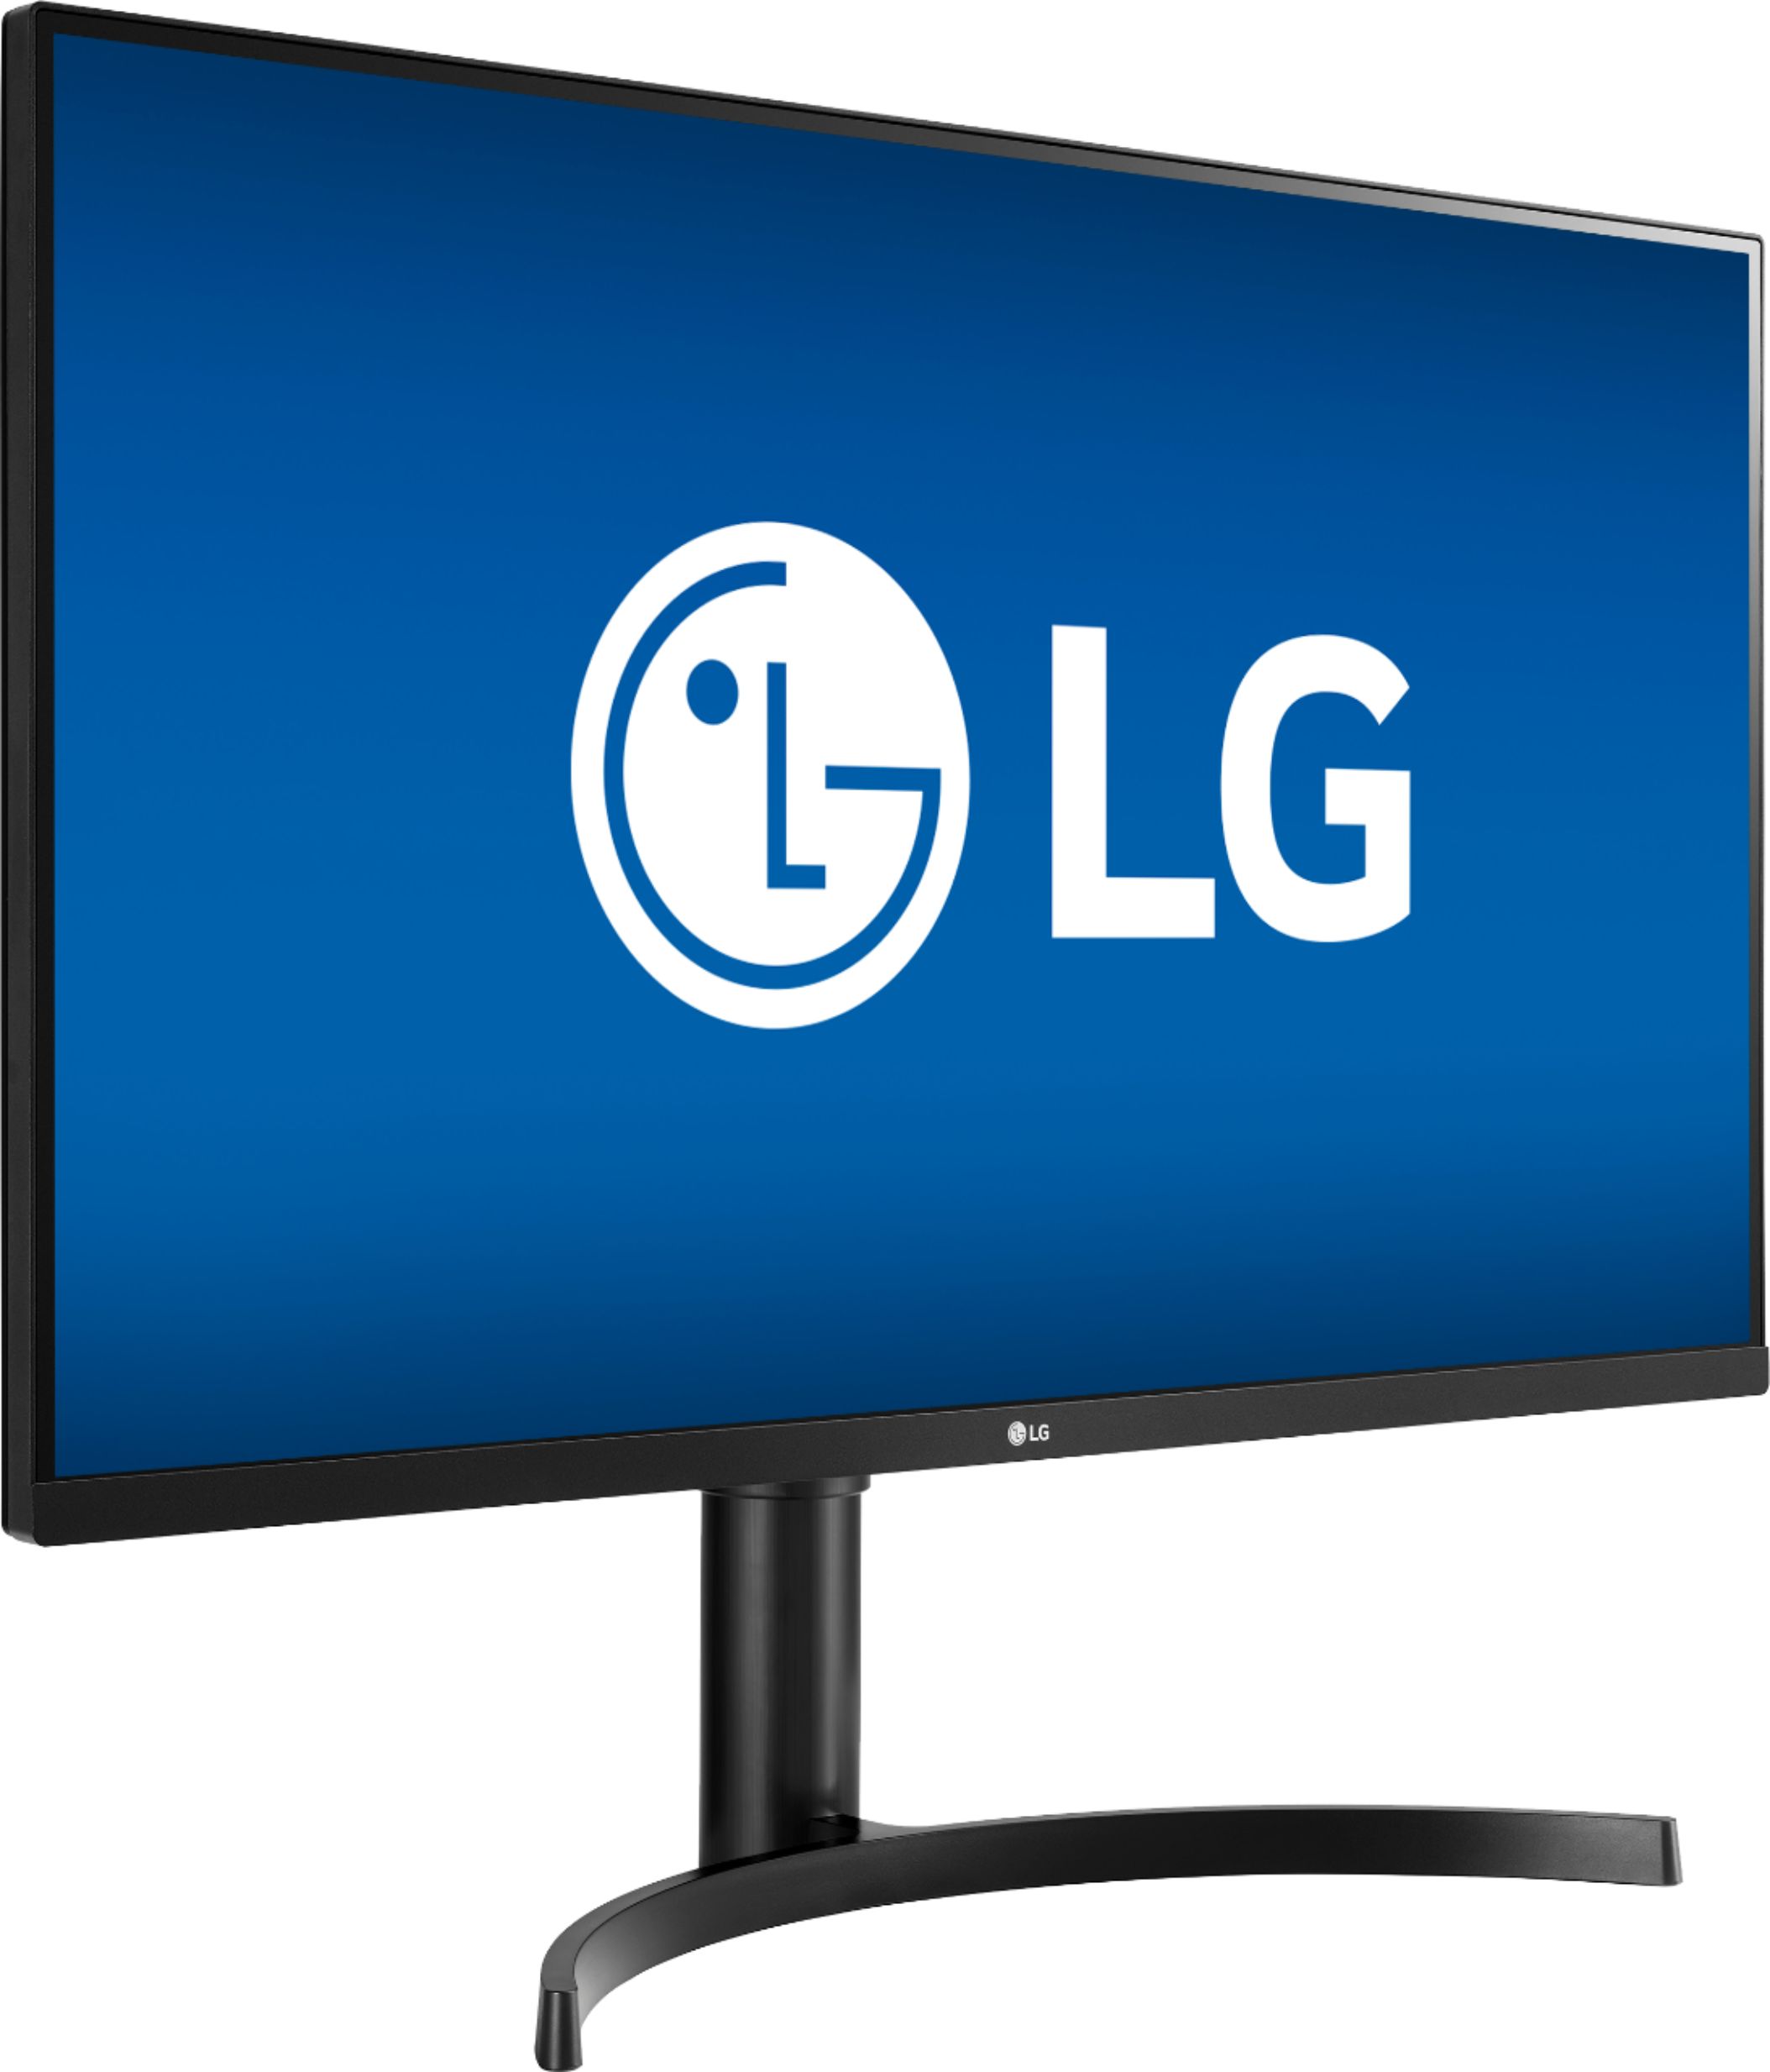 Left View: LG - 32" IPS LED QHD FreeSync Monitor with HDR (HDMI, DisplayPort) - Black